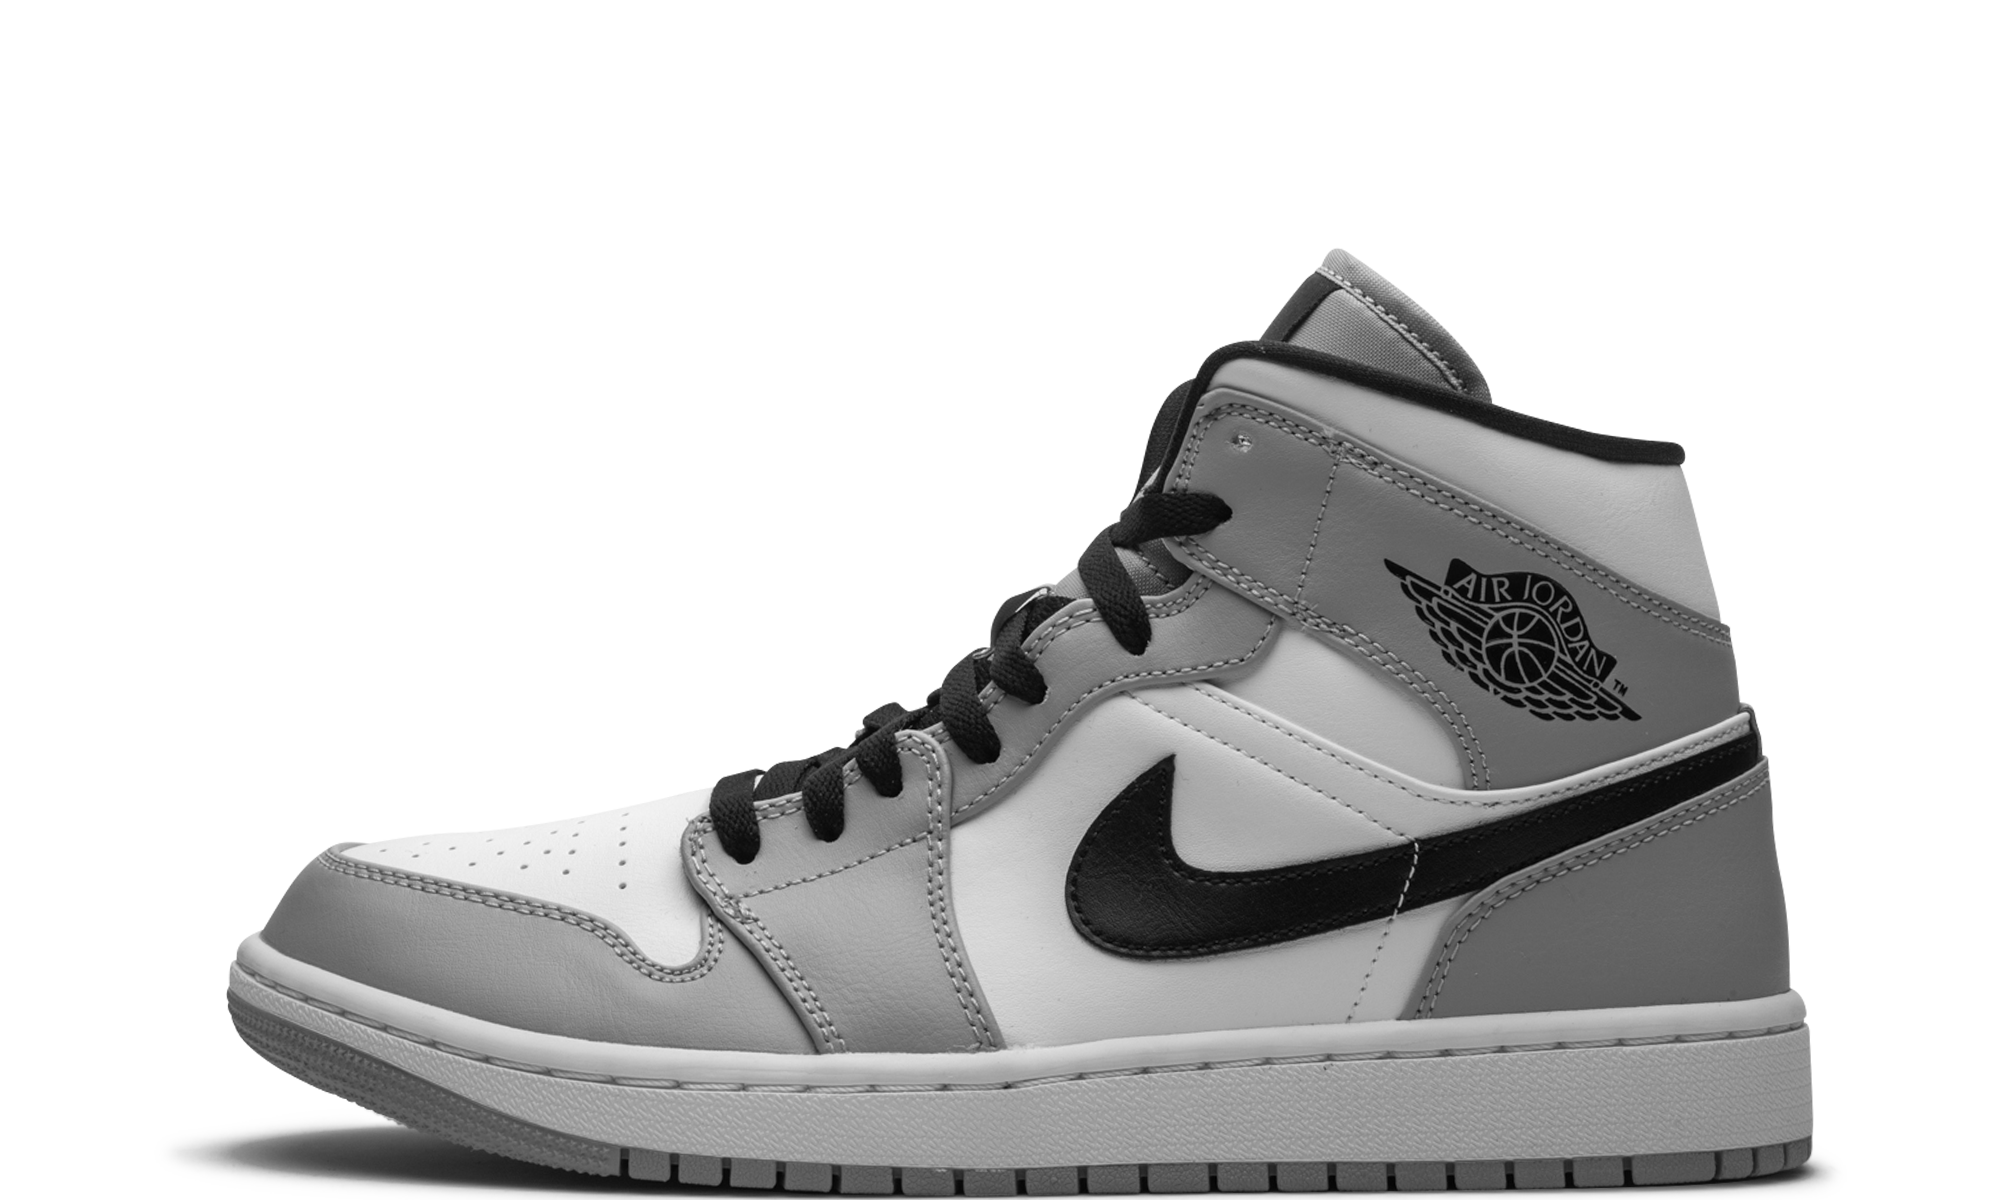 Nike Air Jordan 1 Mid Light Smoke Grey | 554724-092 – SNEAKERS HEAT